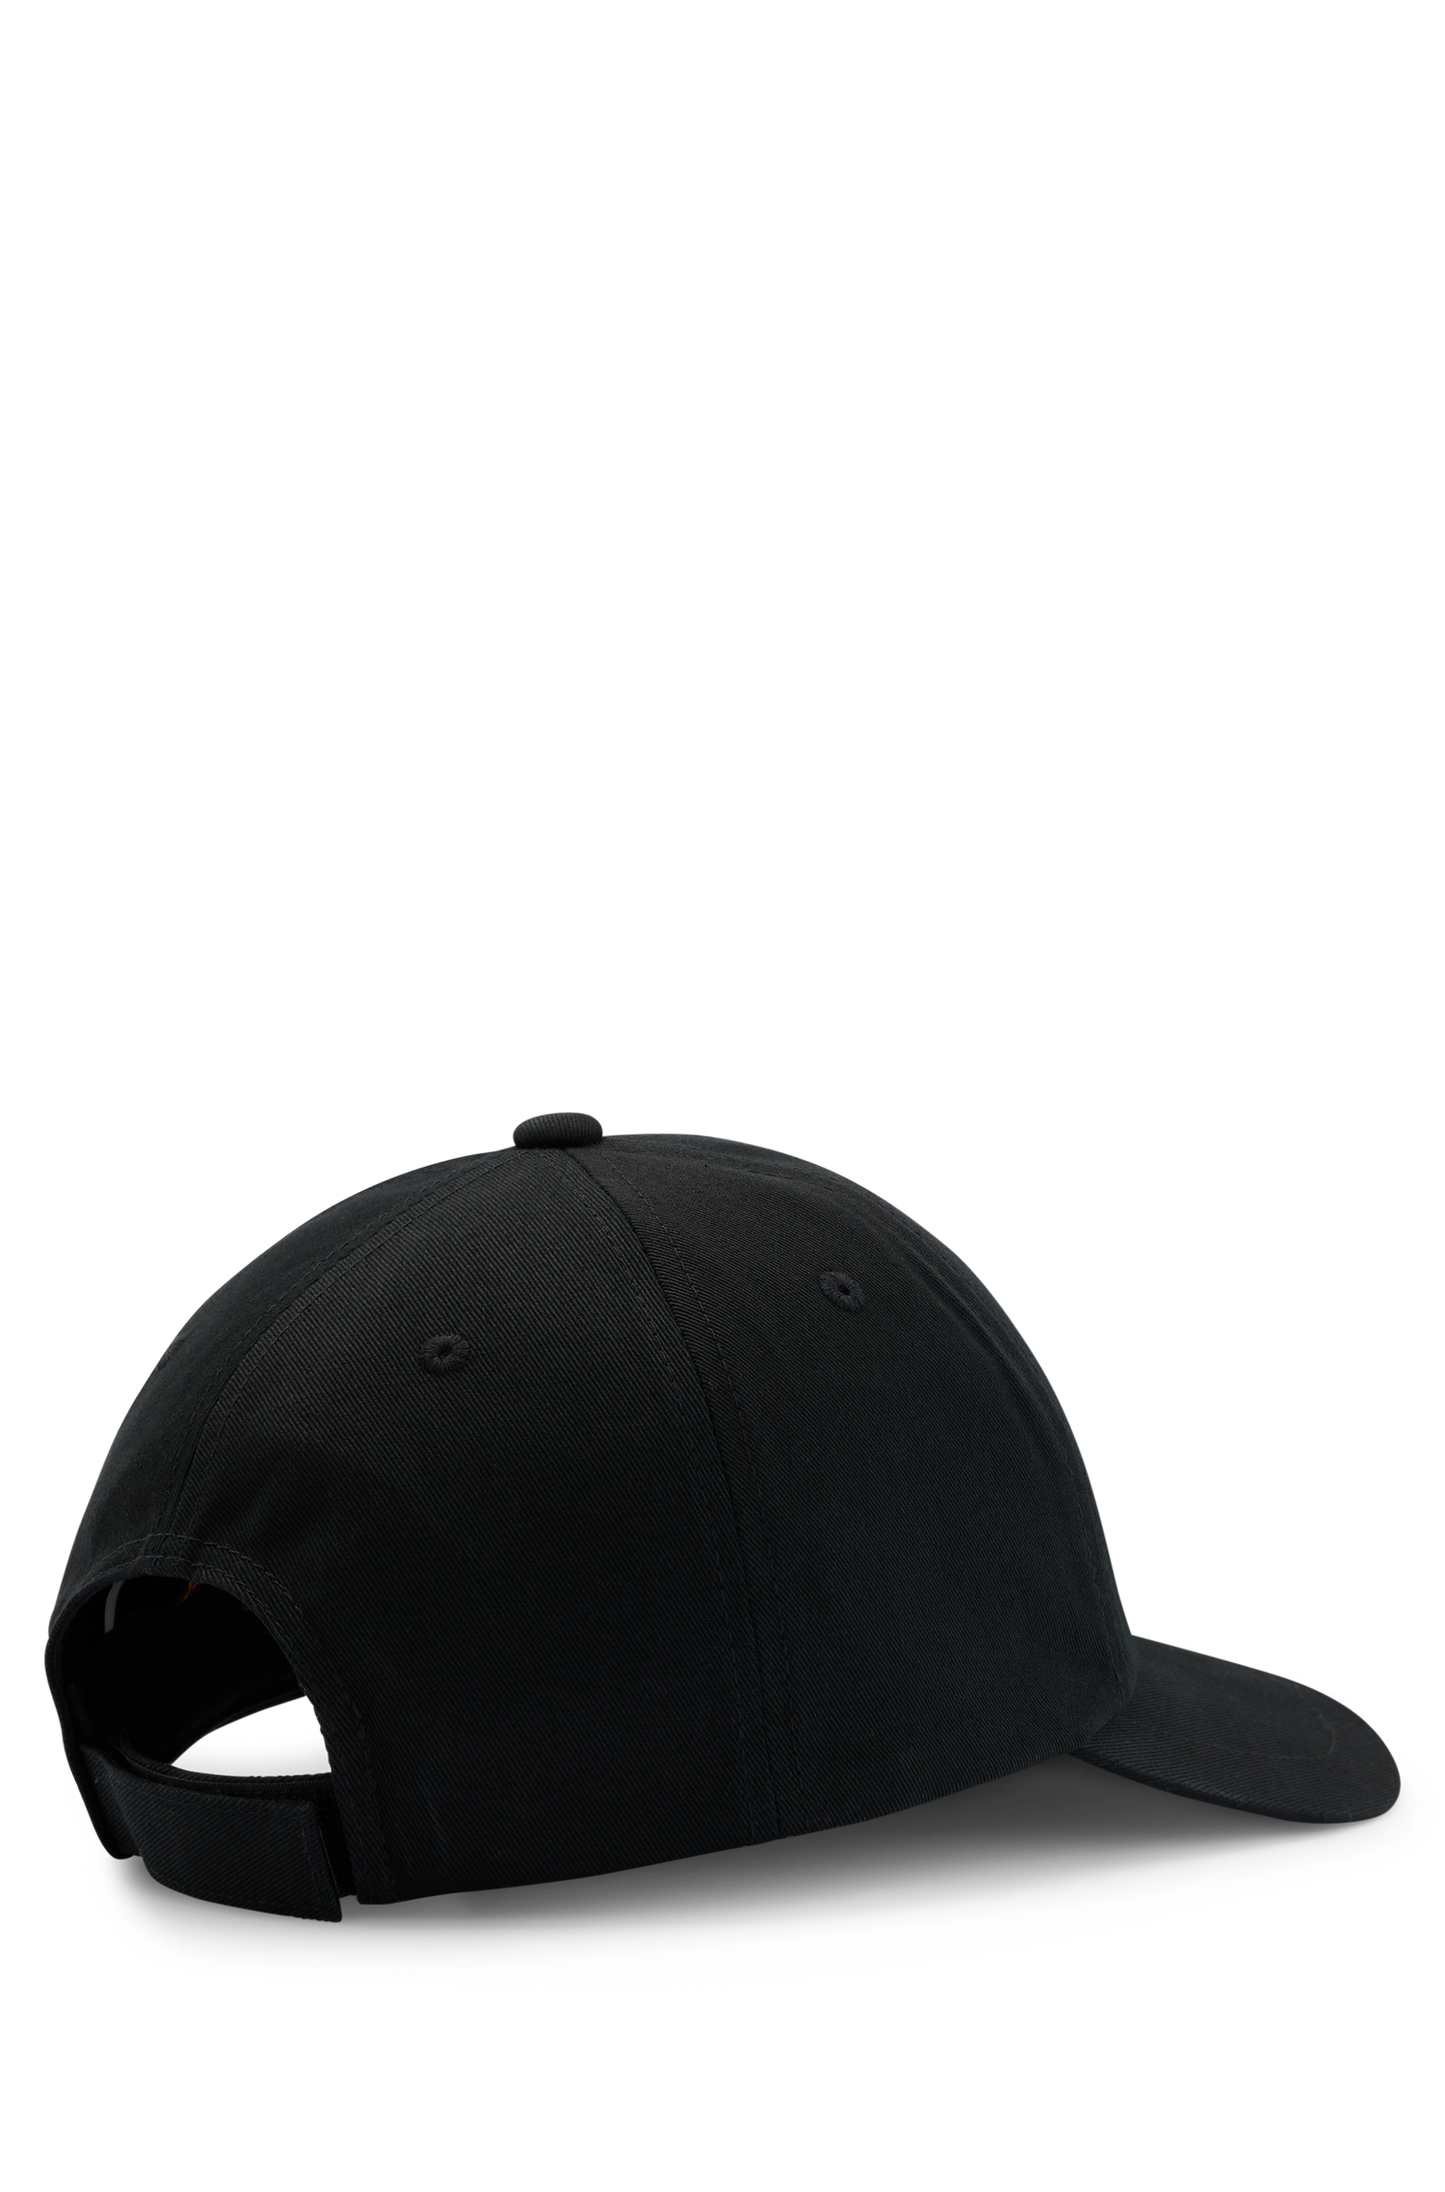 BOSS Baseball Cap - Fresco-4